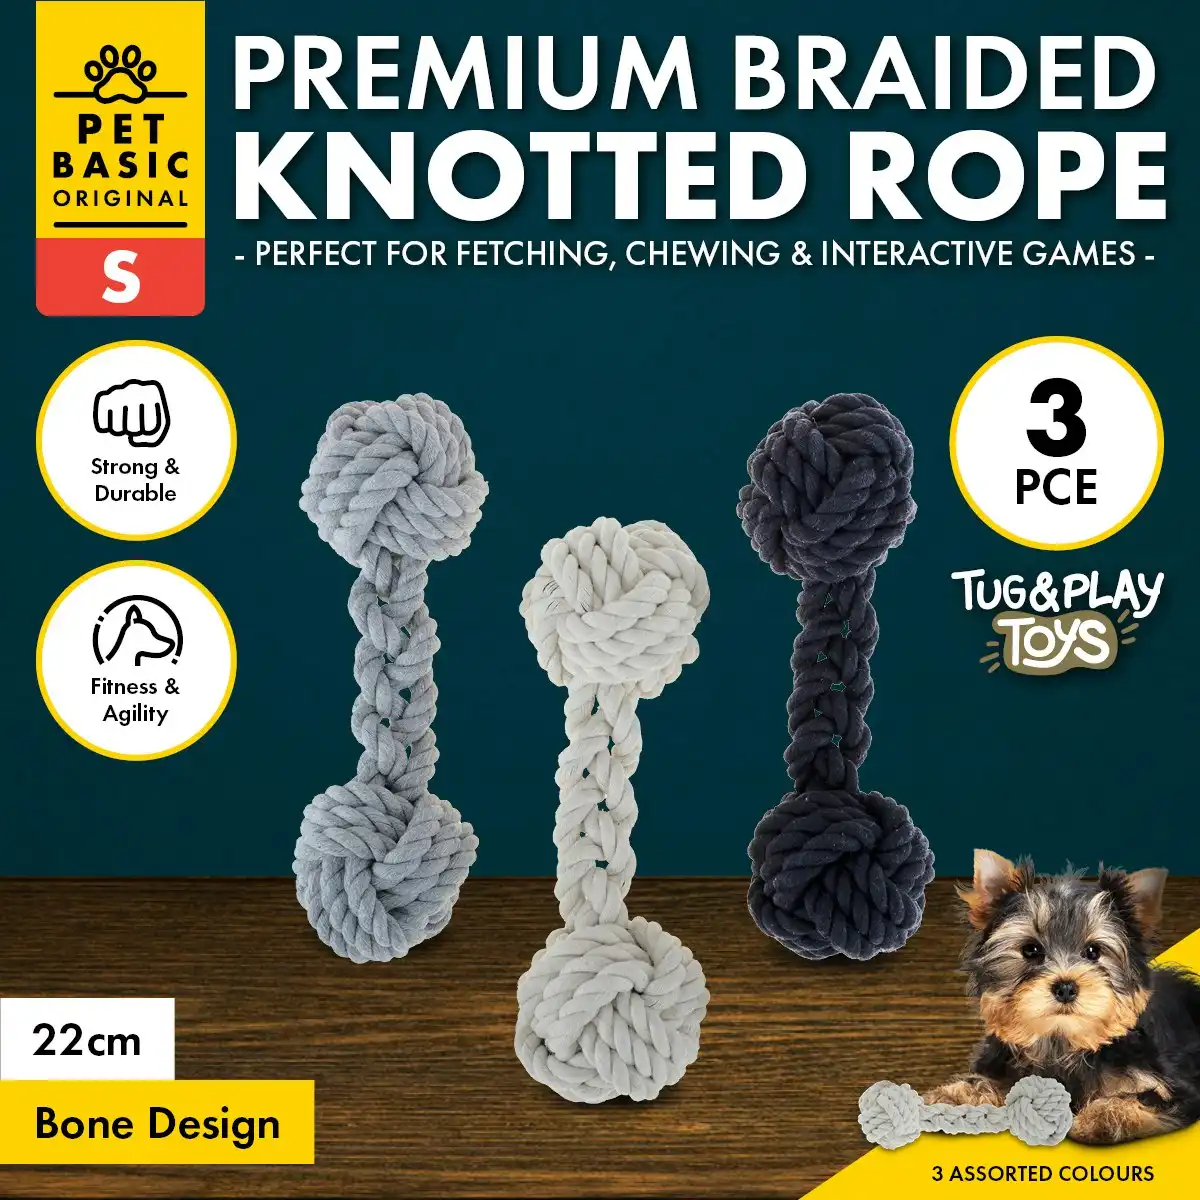 Pet Basic 3PCE Premium Braided Knot Bone Size Small Natural Fibres 22cm